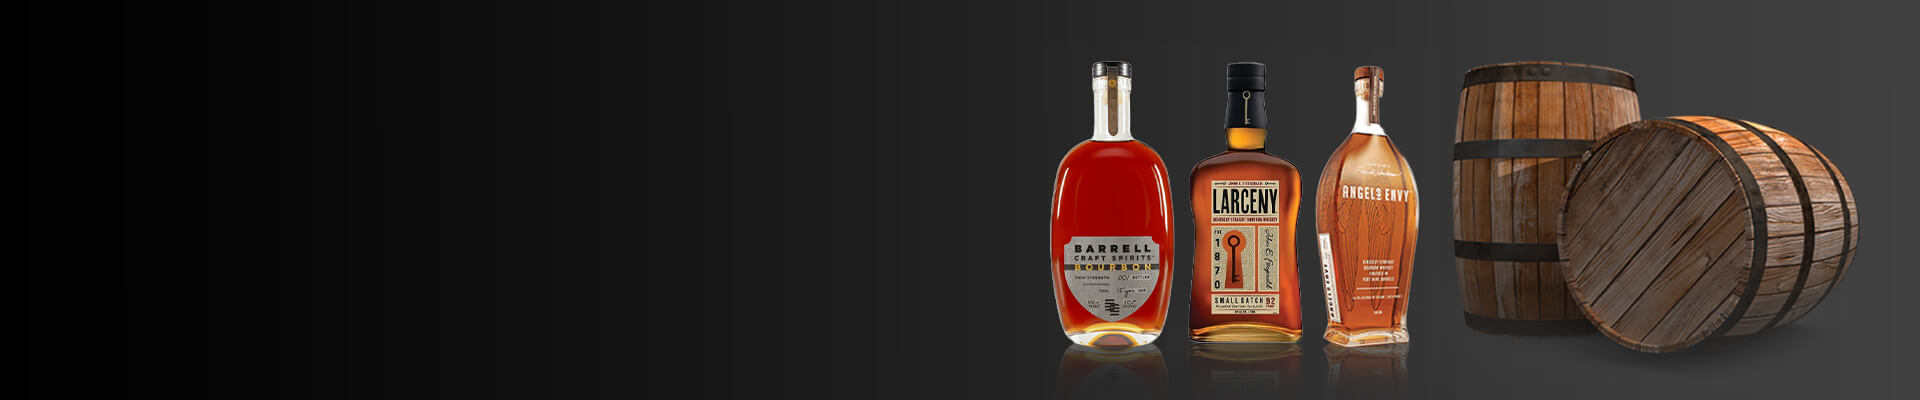 ShopBourbon.com Find the Bourbon you LOVE!